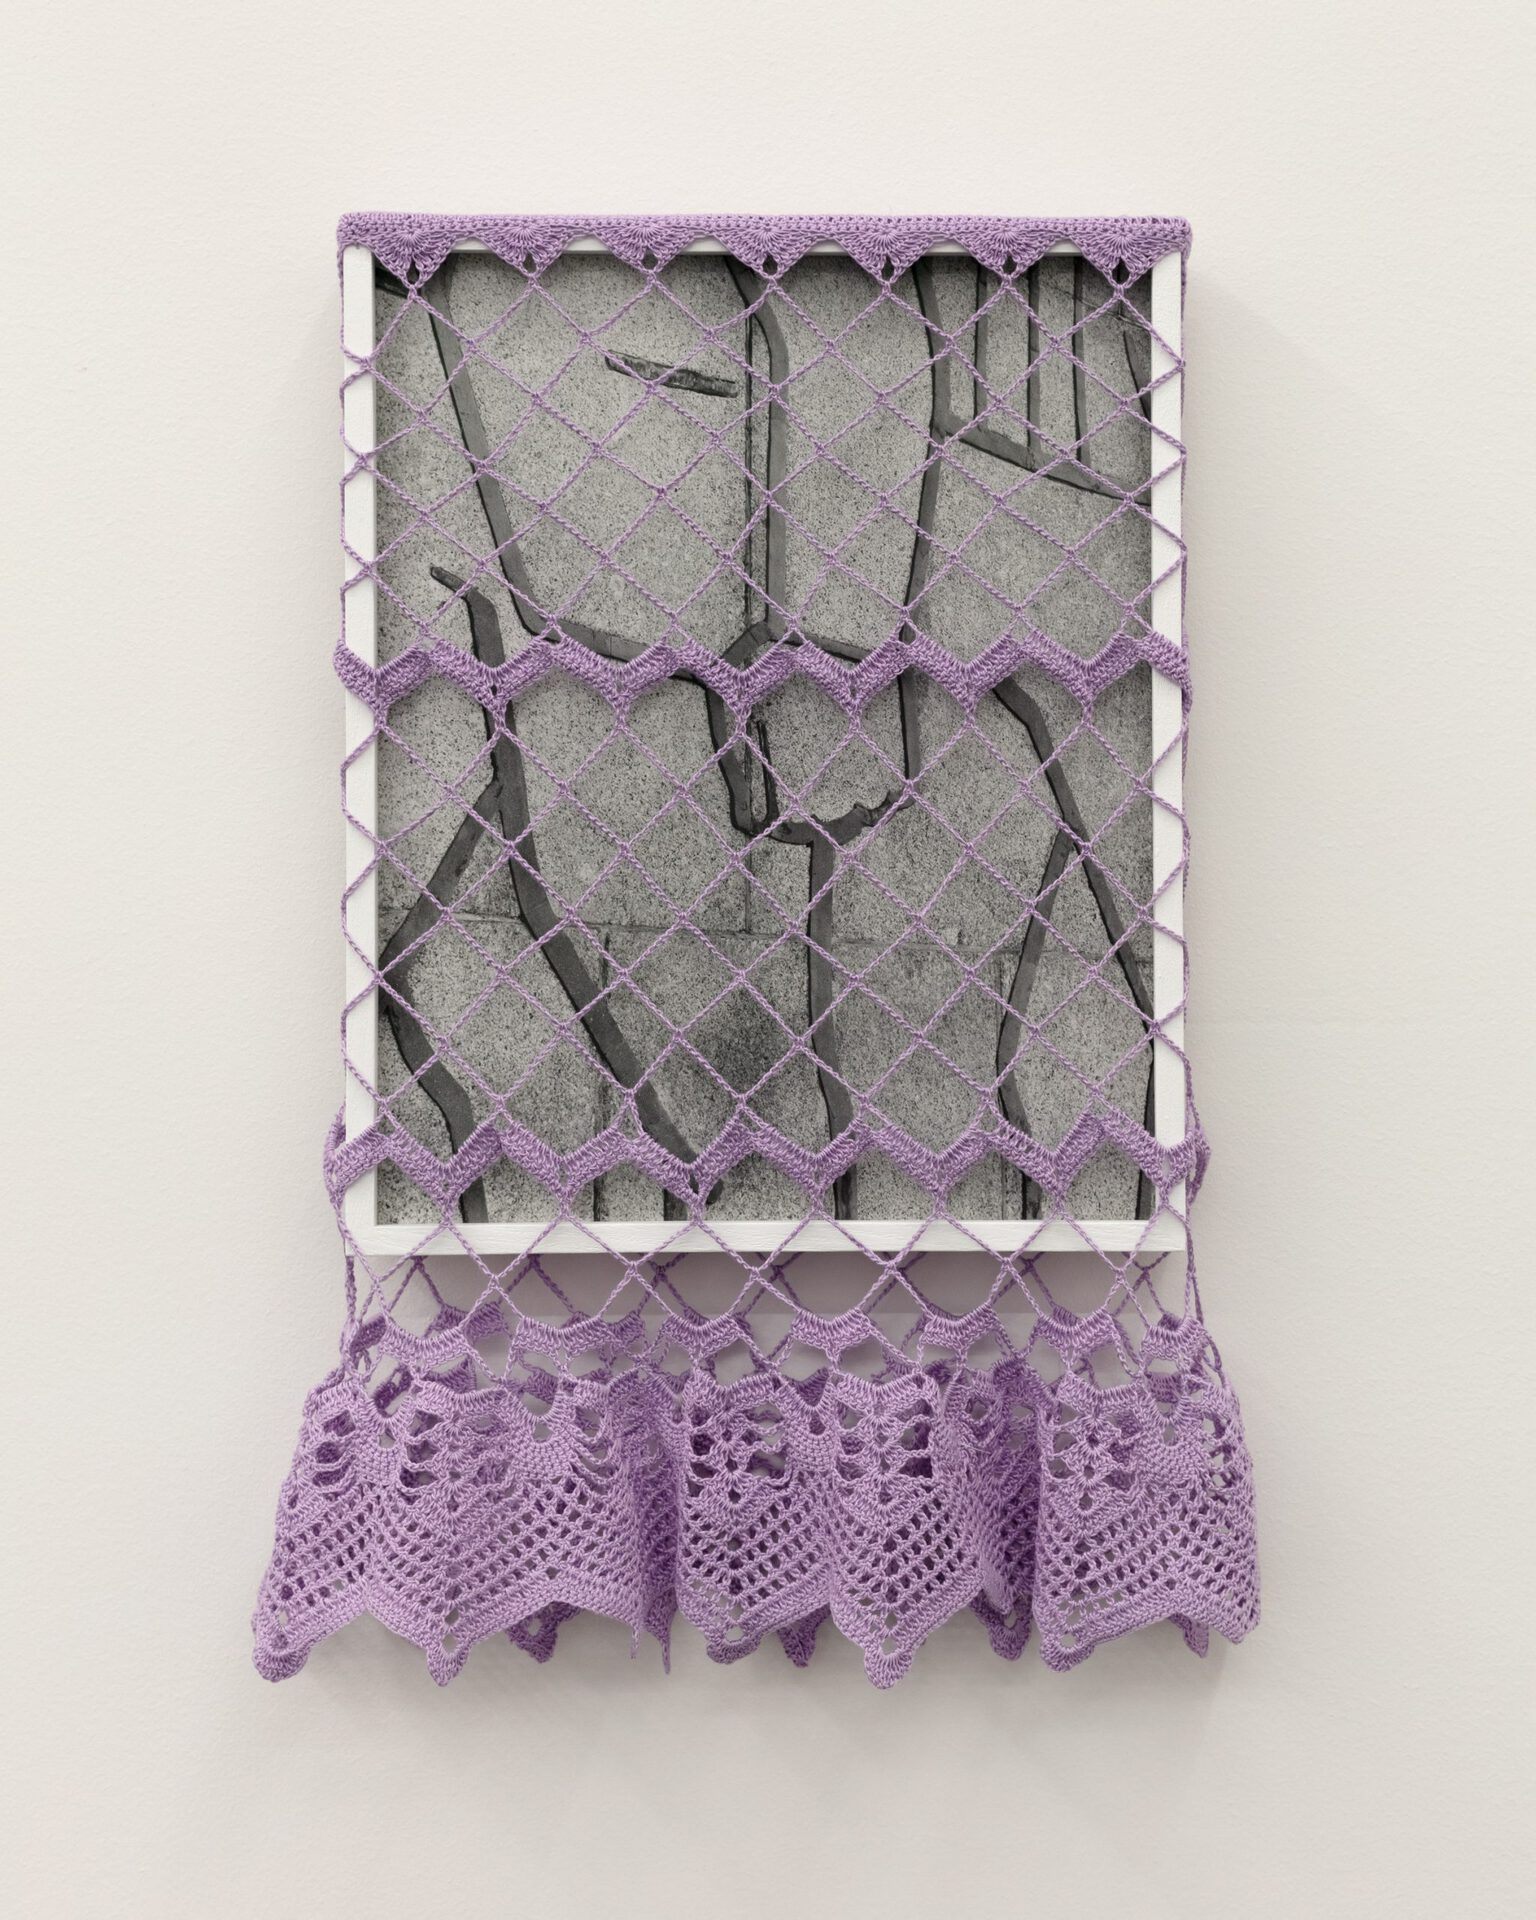 Anna Orłowska, Fist, 2022, Gelatine silver print, mounted on dibond, ivory wooden frame, museum glass, cotton crochet, unique, 37 x 30 cm